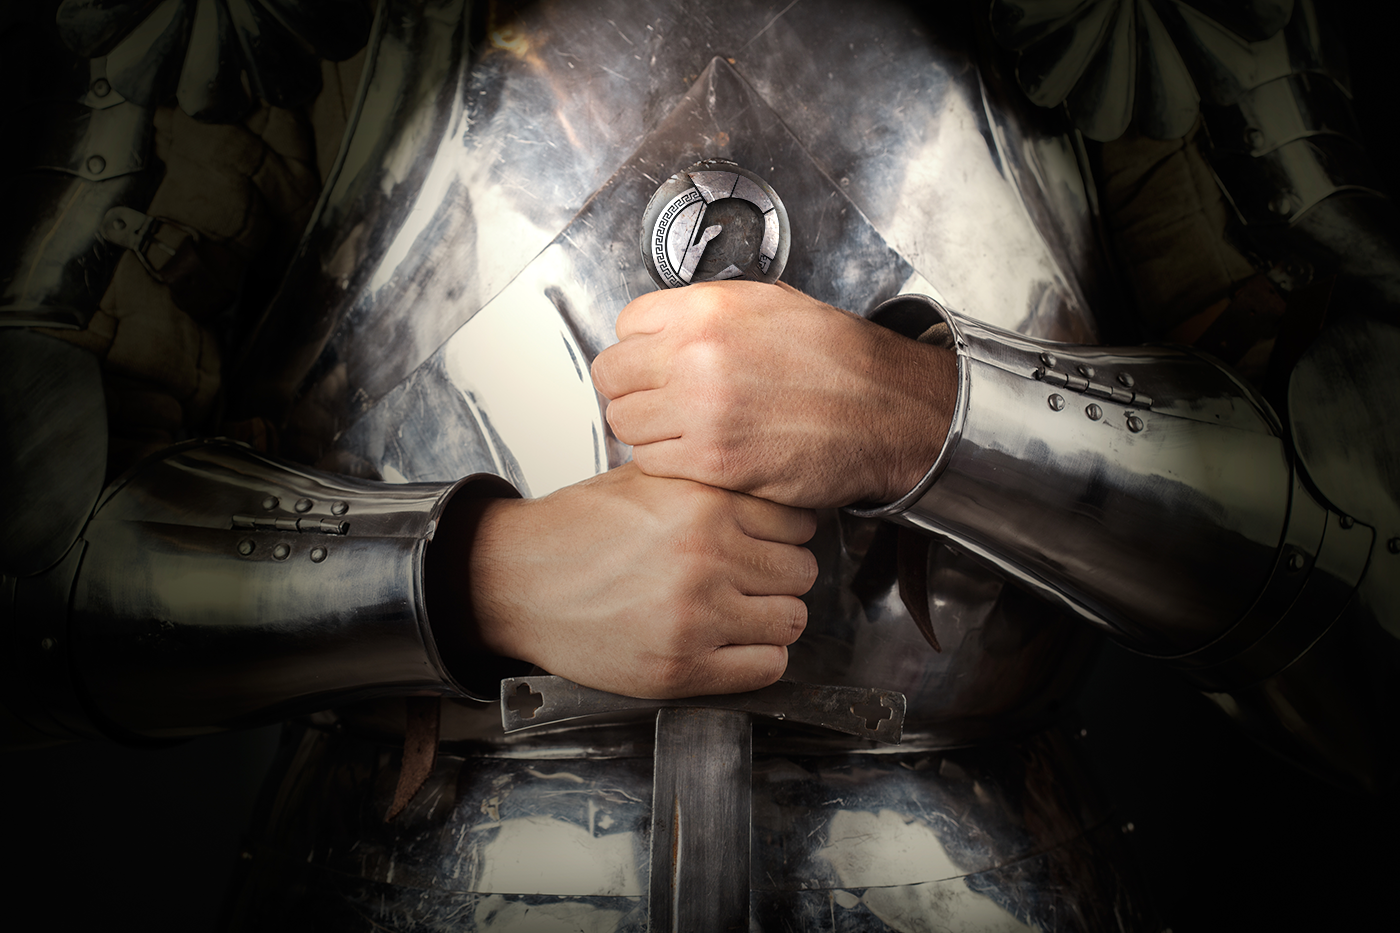 Caribonis Armory Armory Sword axe Armor shield medieval lance steel valyrian rpg D&D LOTR Golden Ratio